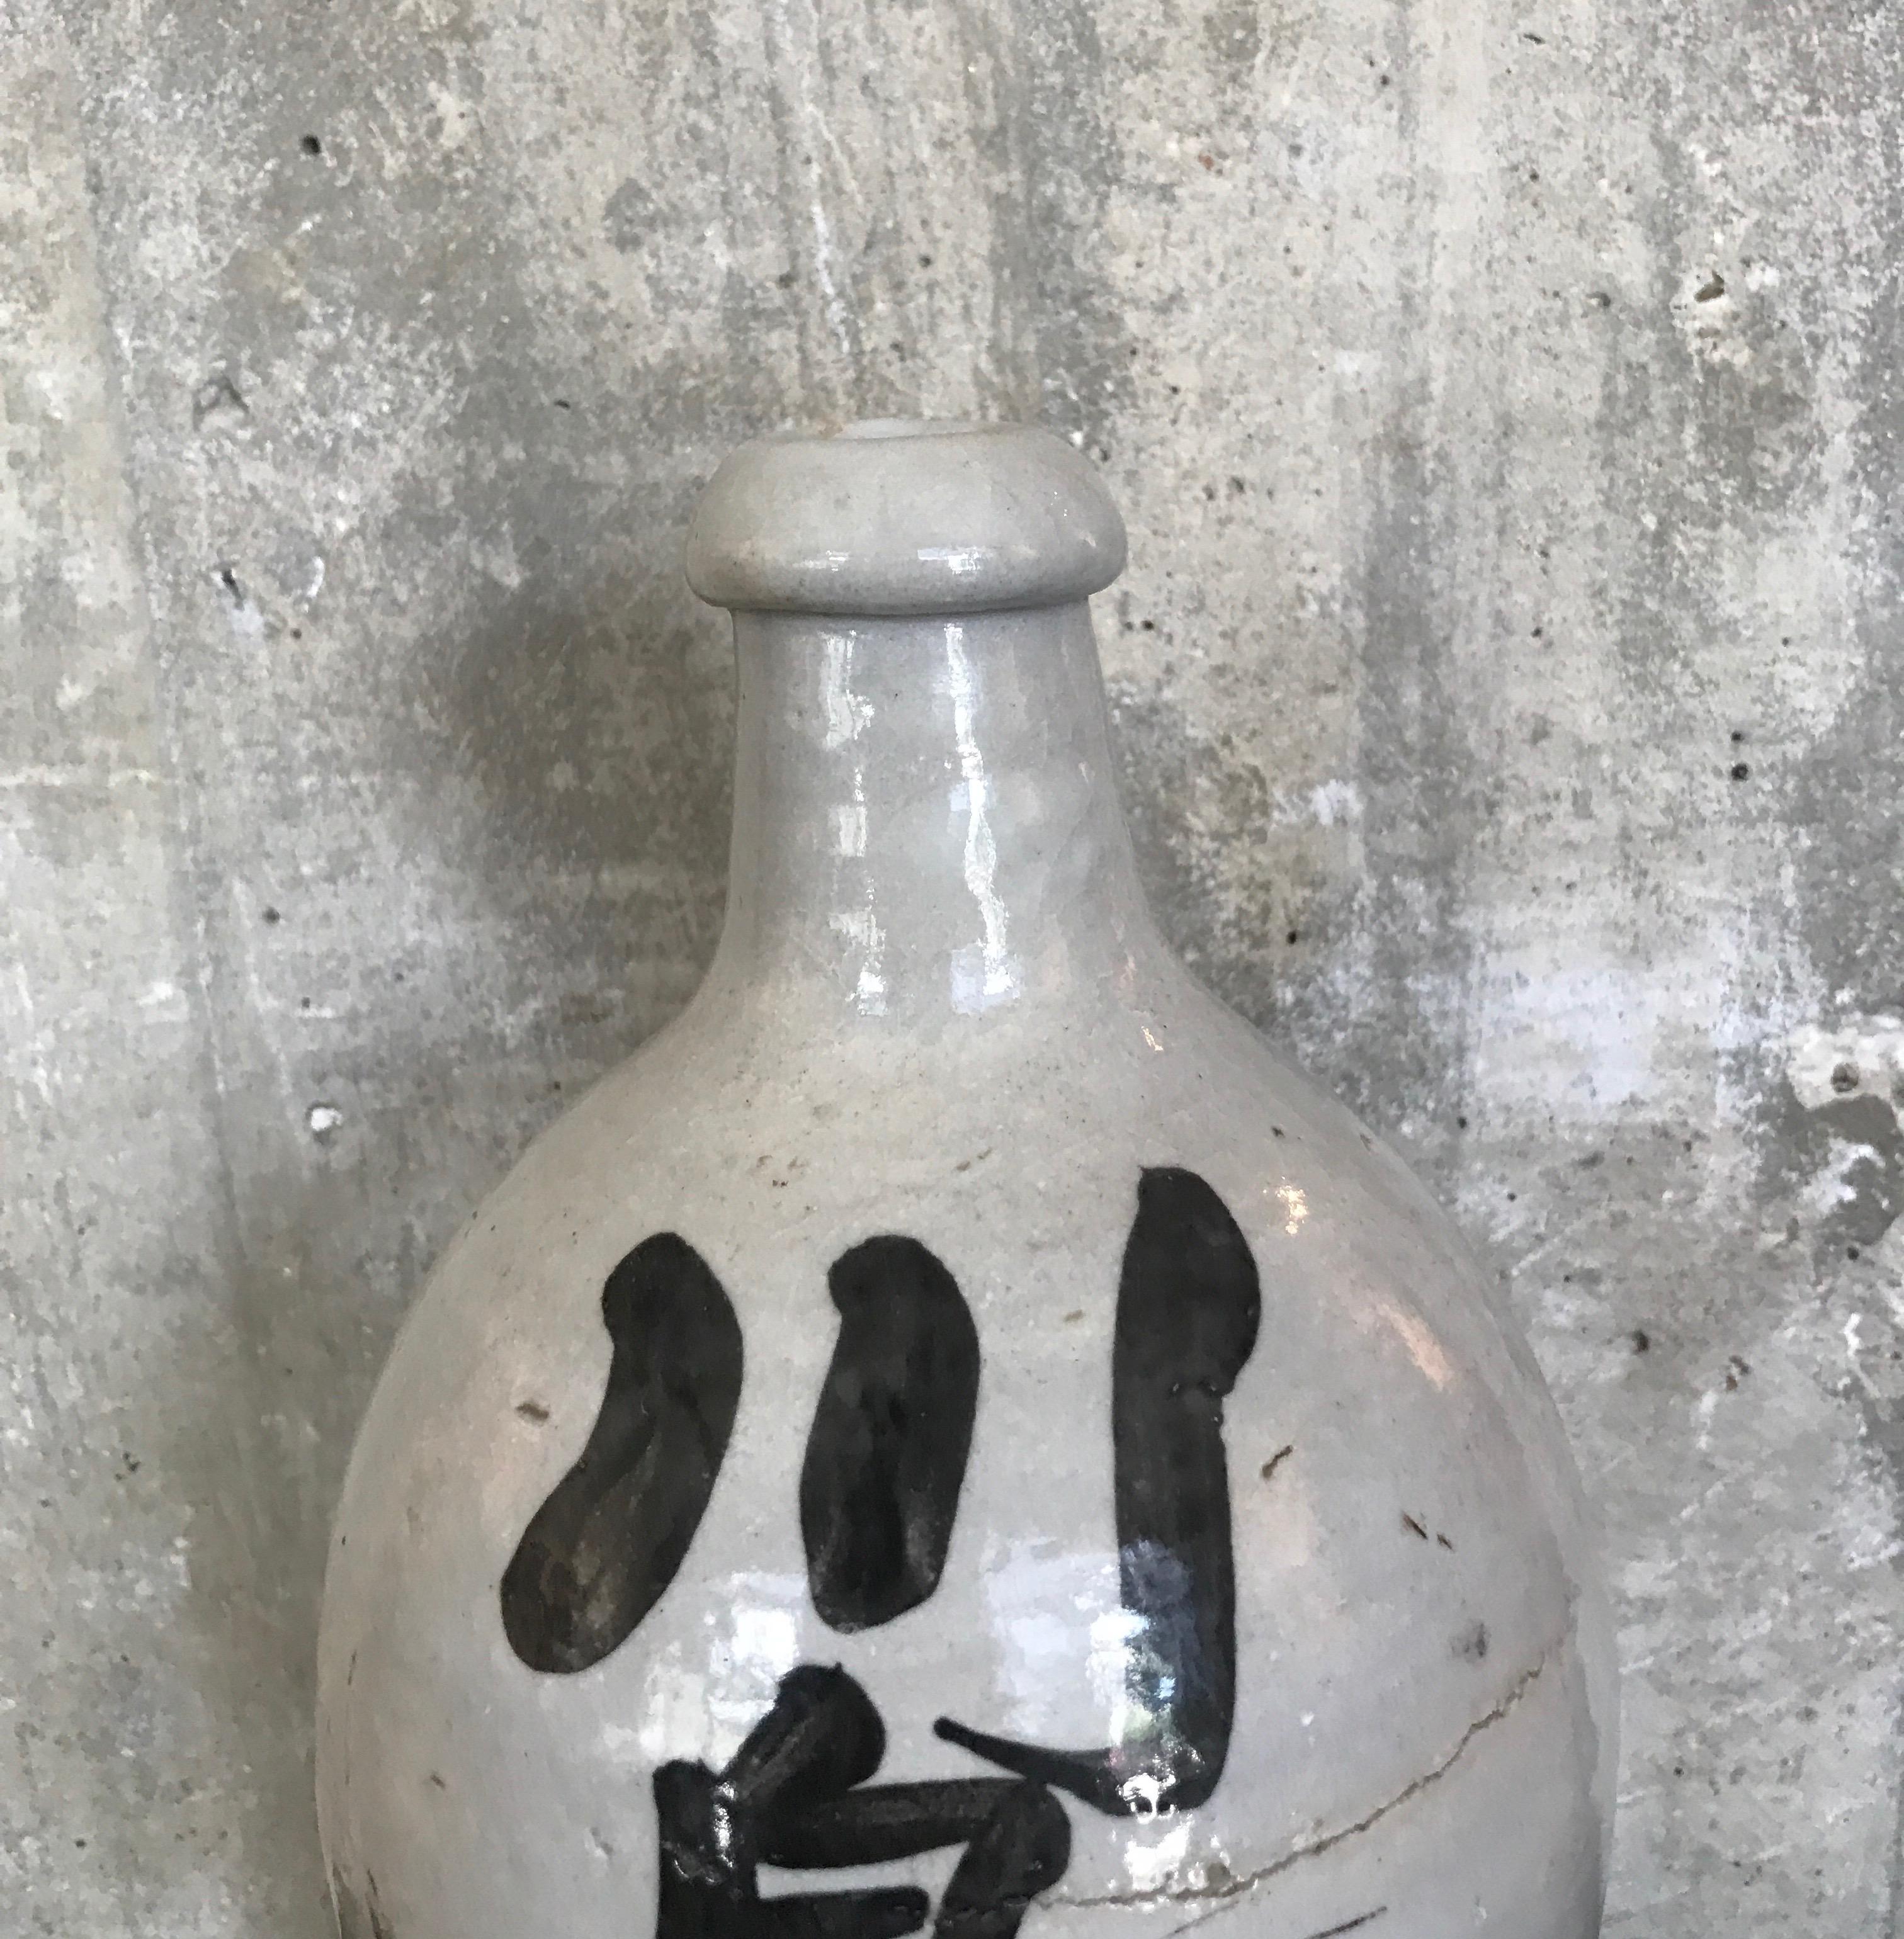 old sake bottle